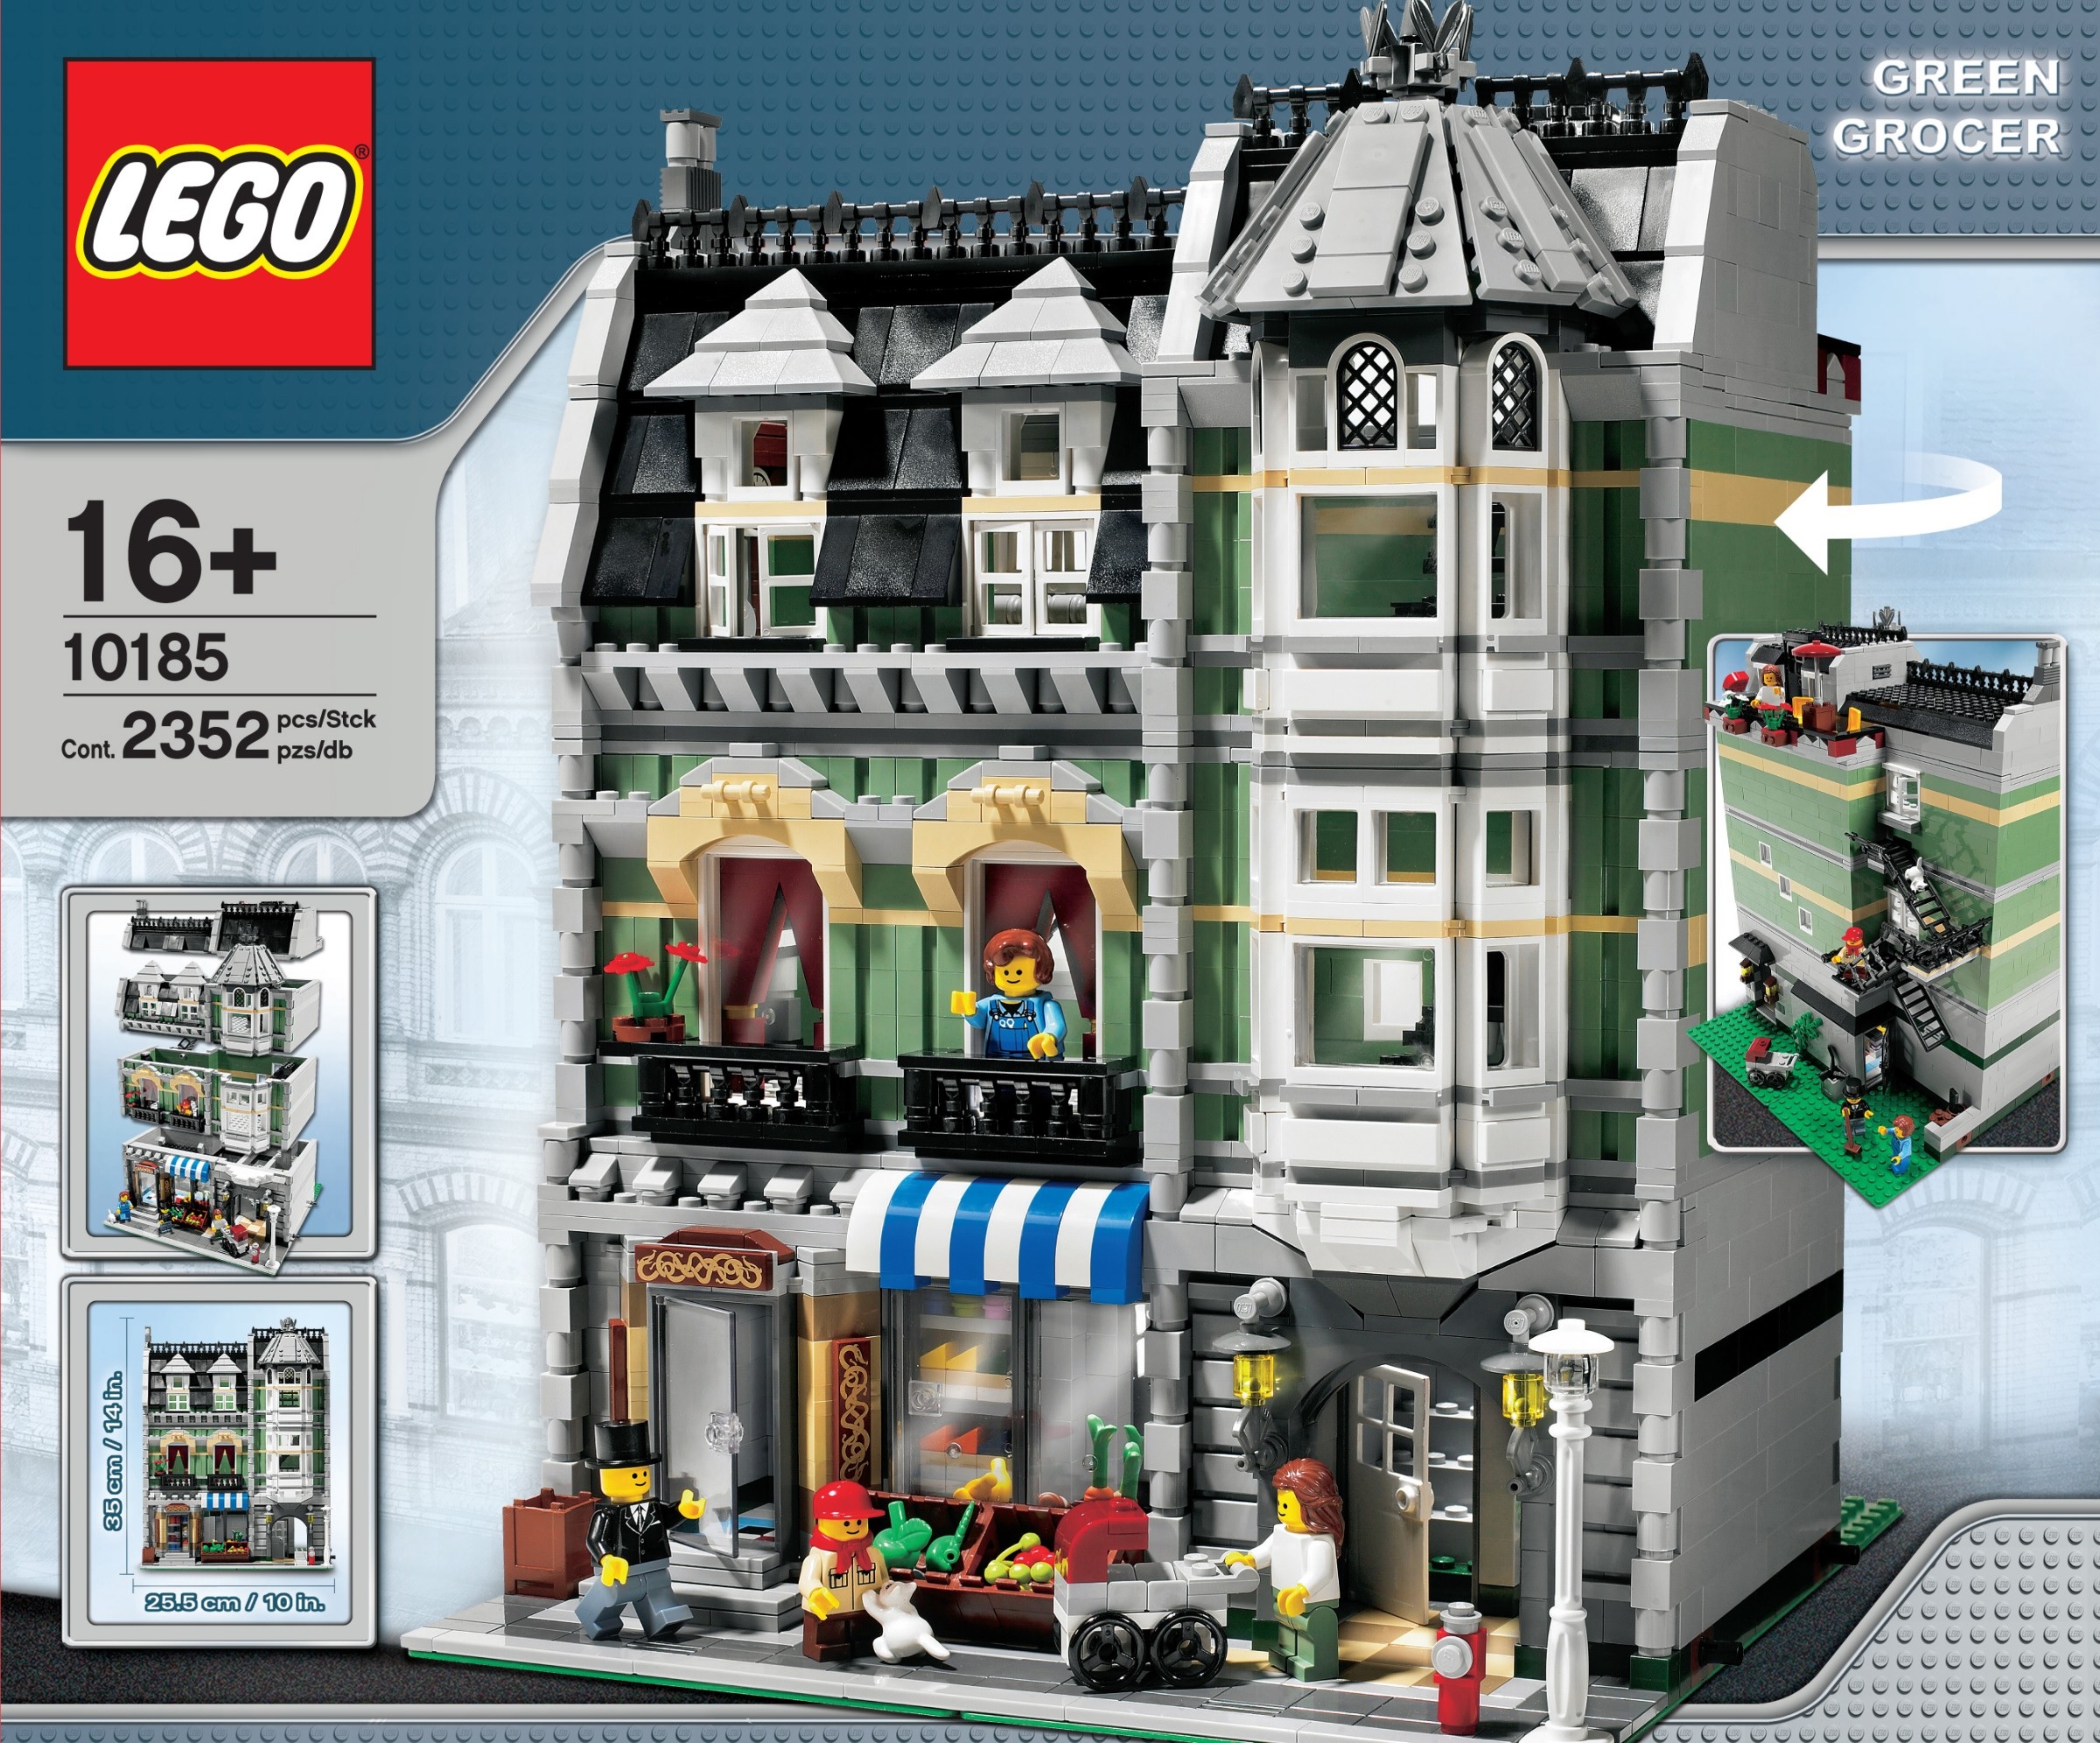 LEGO CREATOR EXPERT - Green Grocer - 10185